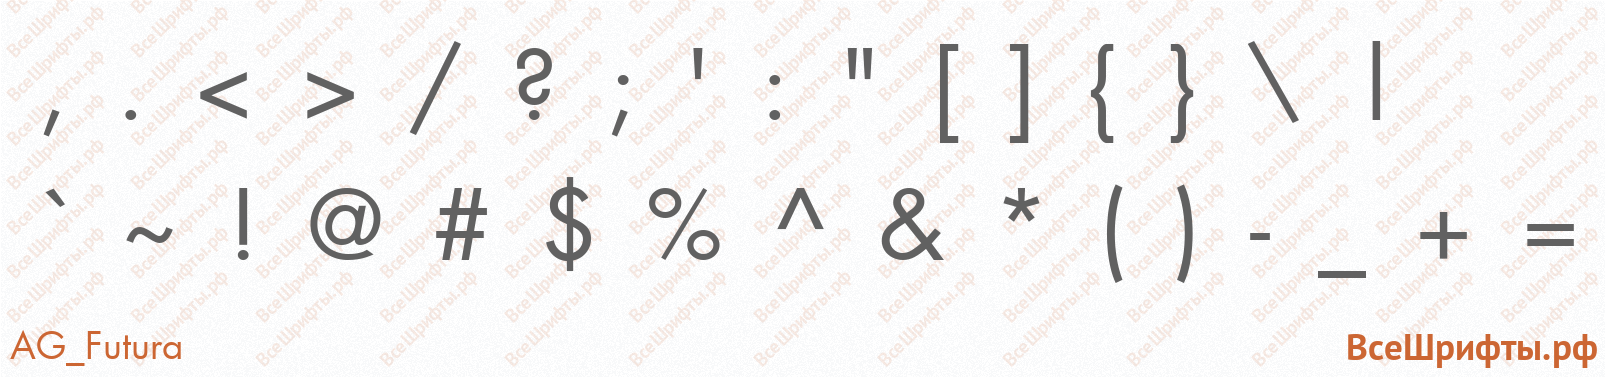 Шрифт AG_Futura со знаками препинания и пунктуации